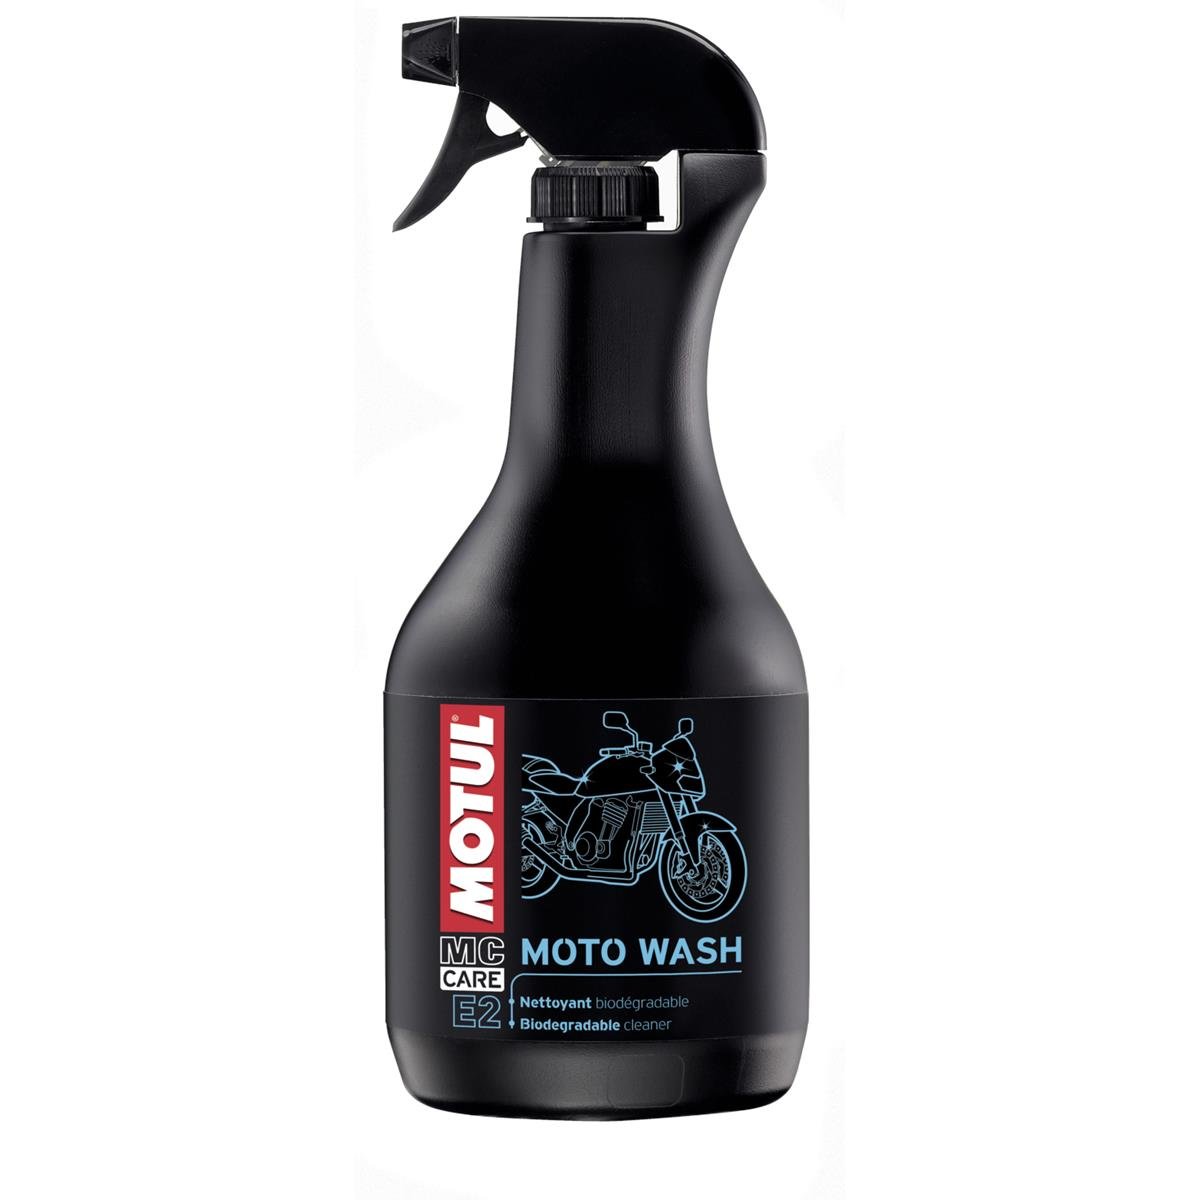 Motul Bike-Reiniger Moto Wash E2 MC Care, 1 L